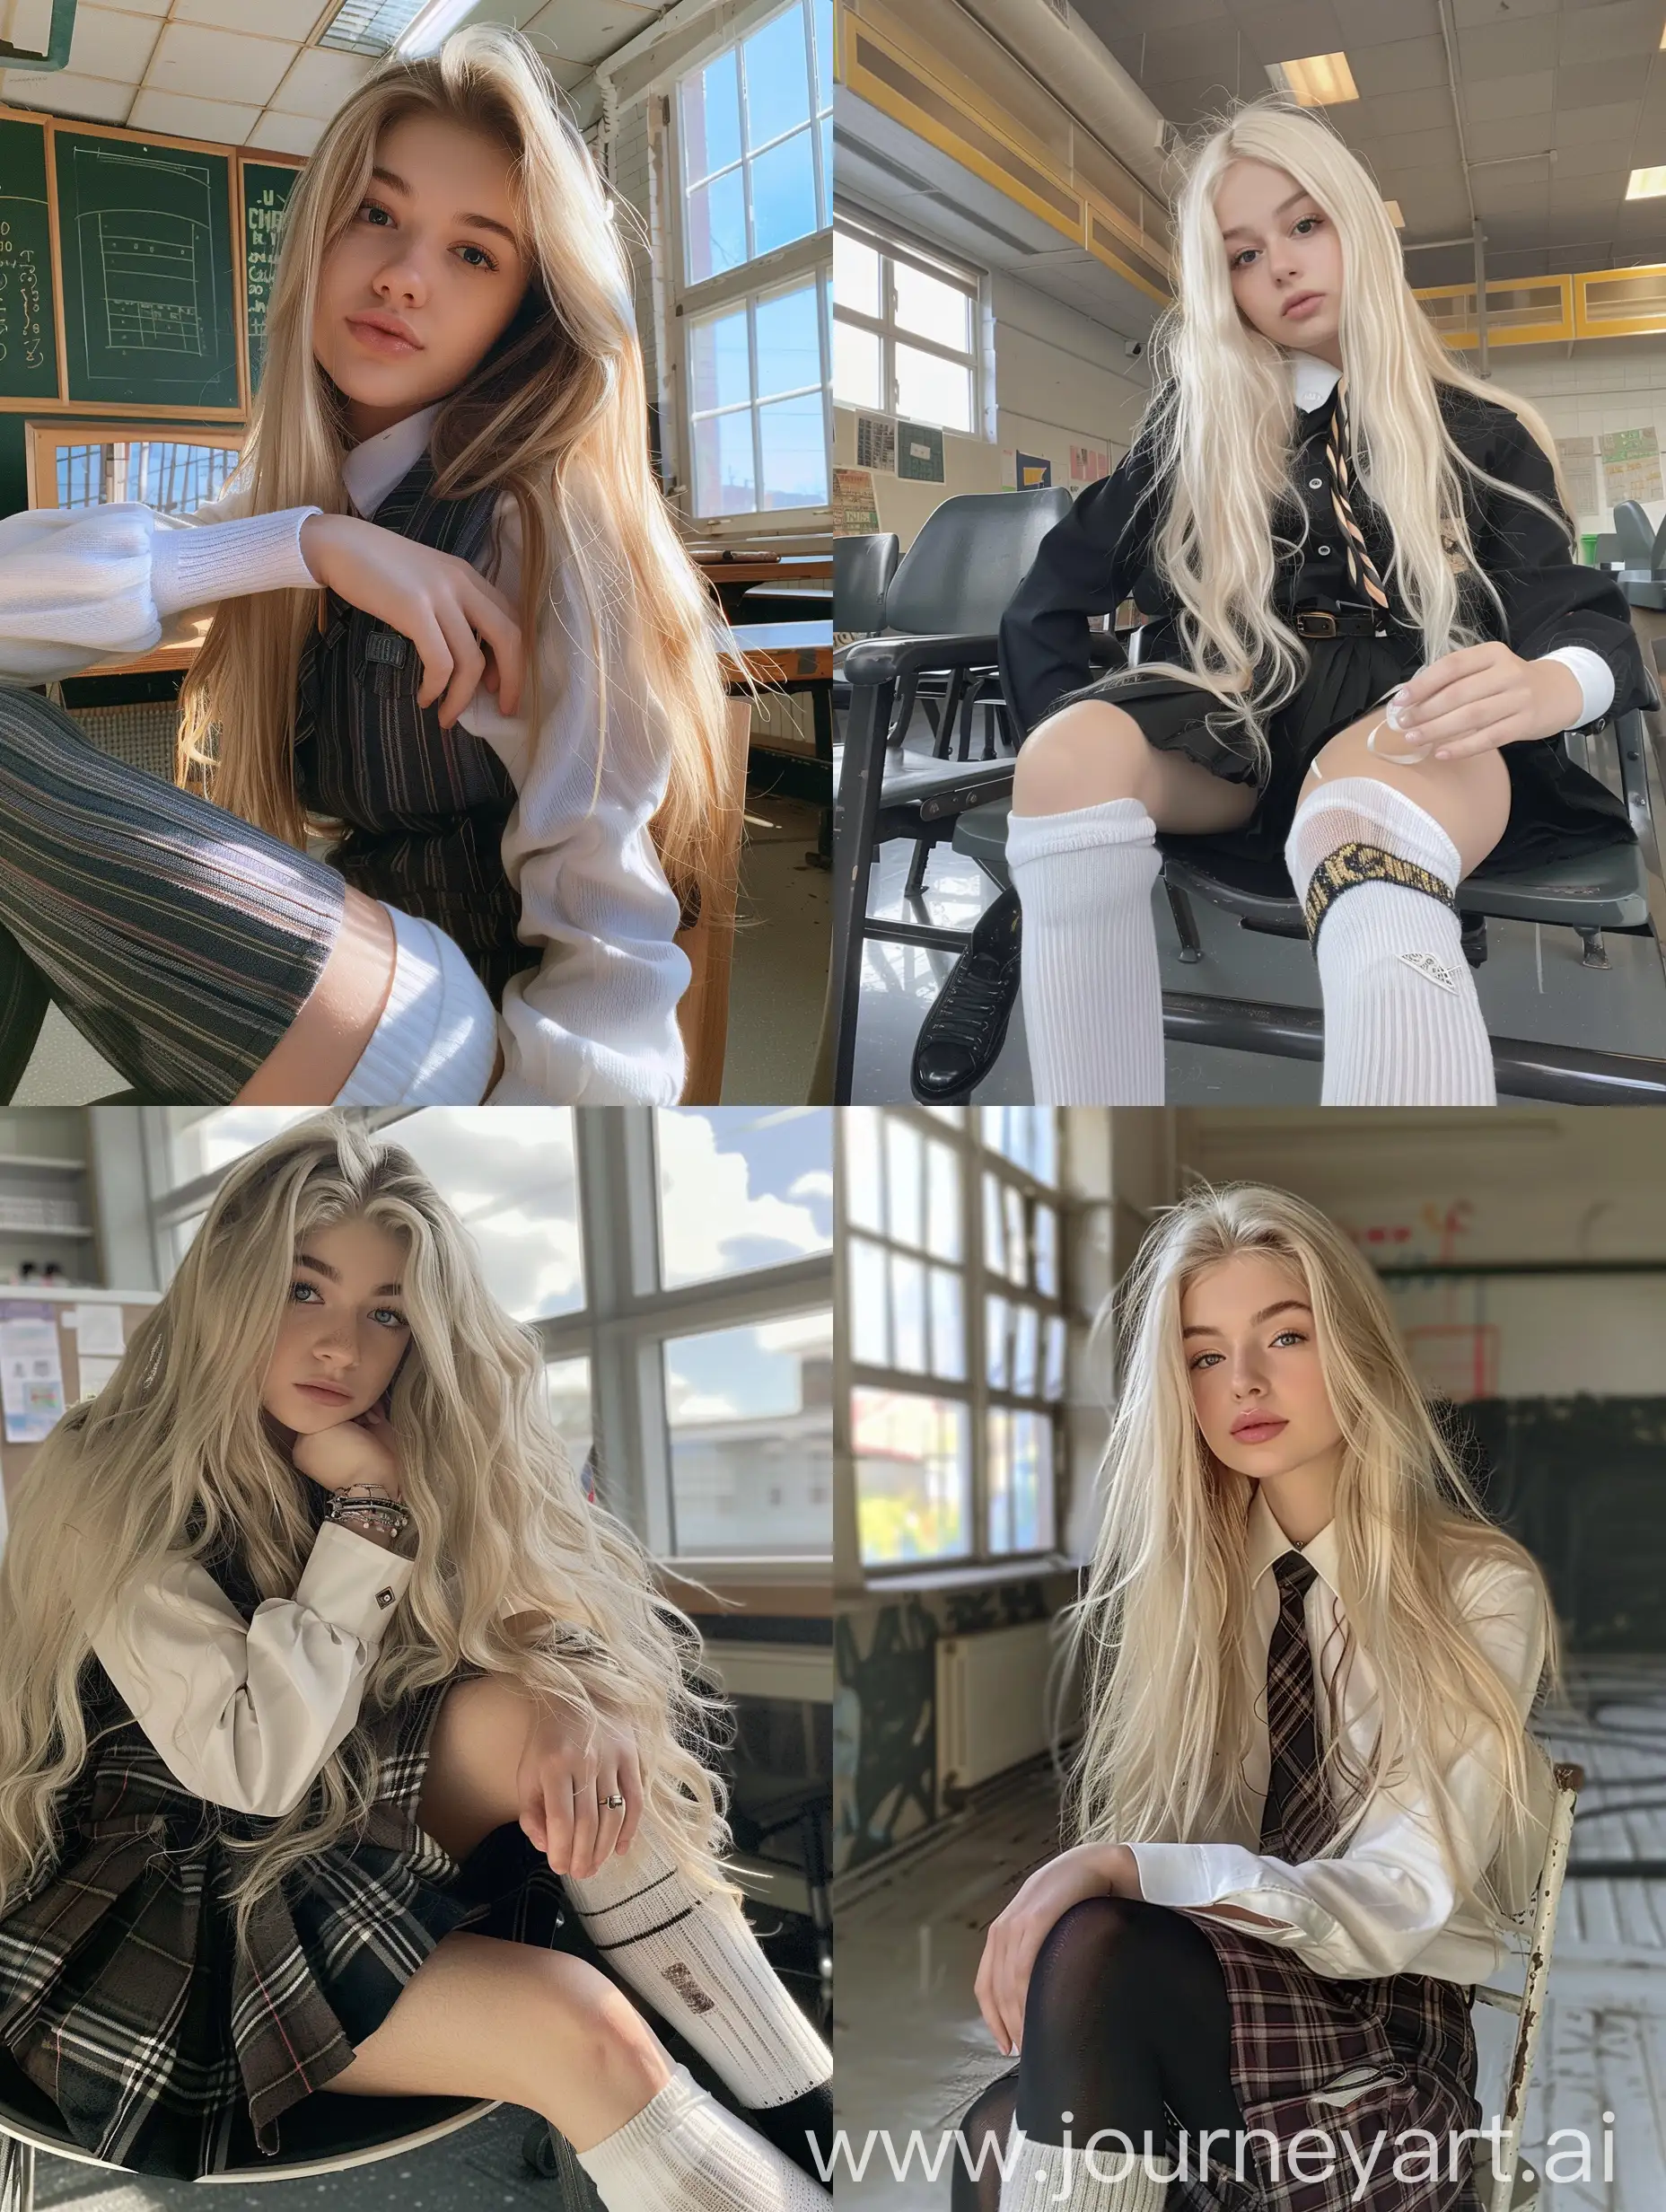 Blonde-Influencer-Girl-in-School-Uniform-Taking-Natural-iPhone-Selfie